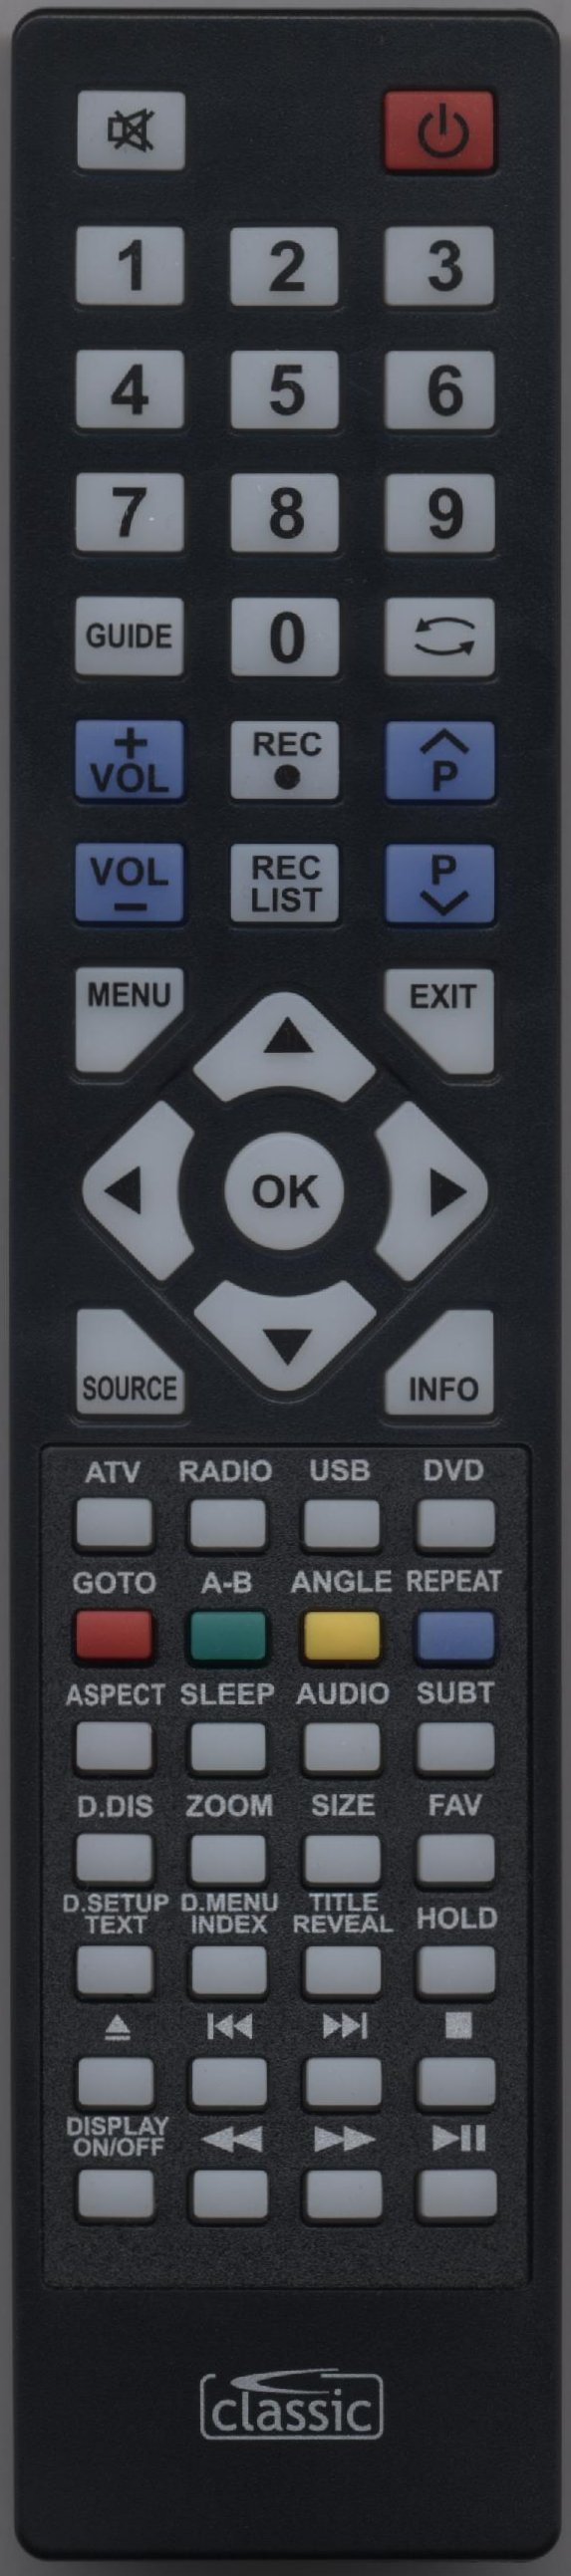 UMC M2328 (Inc DVD/USB) Remote Control Alternative